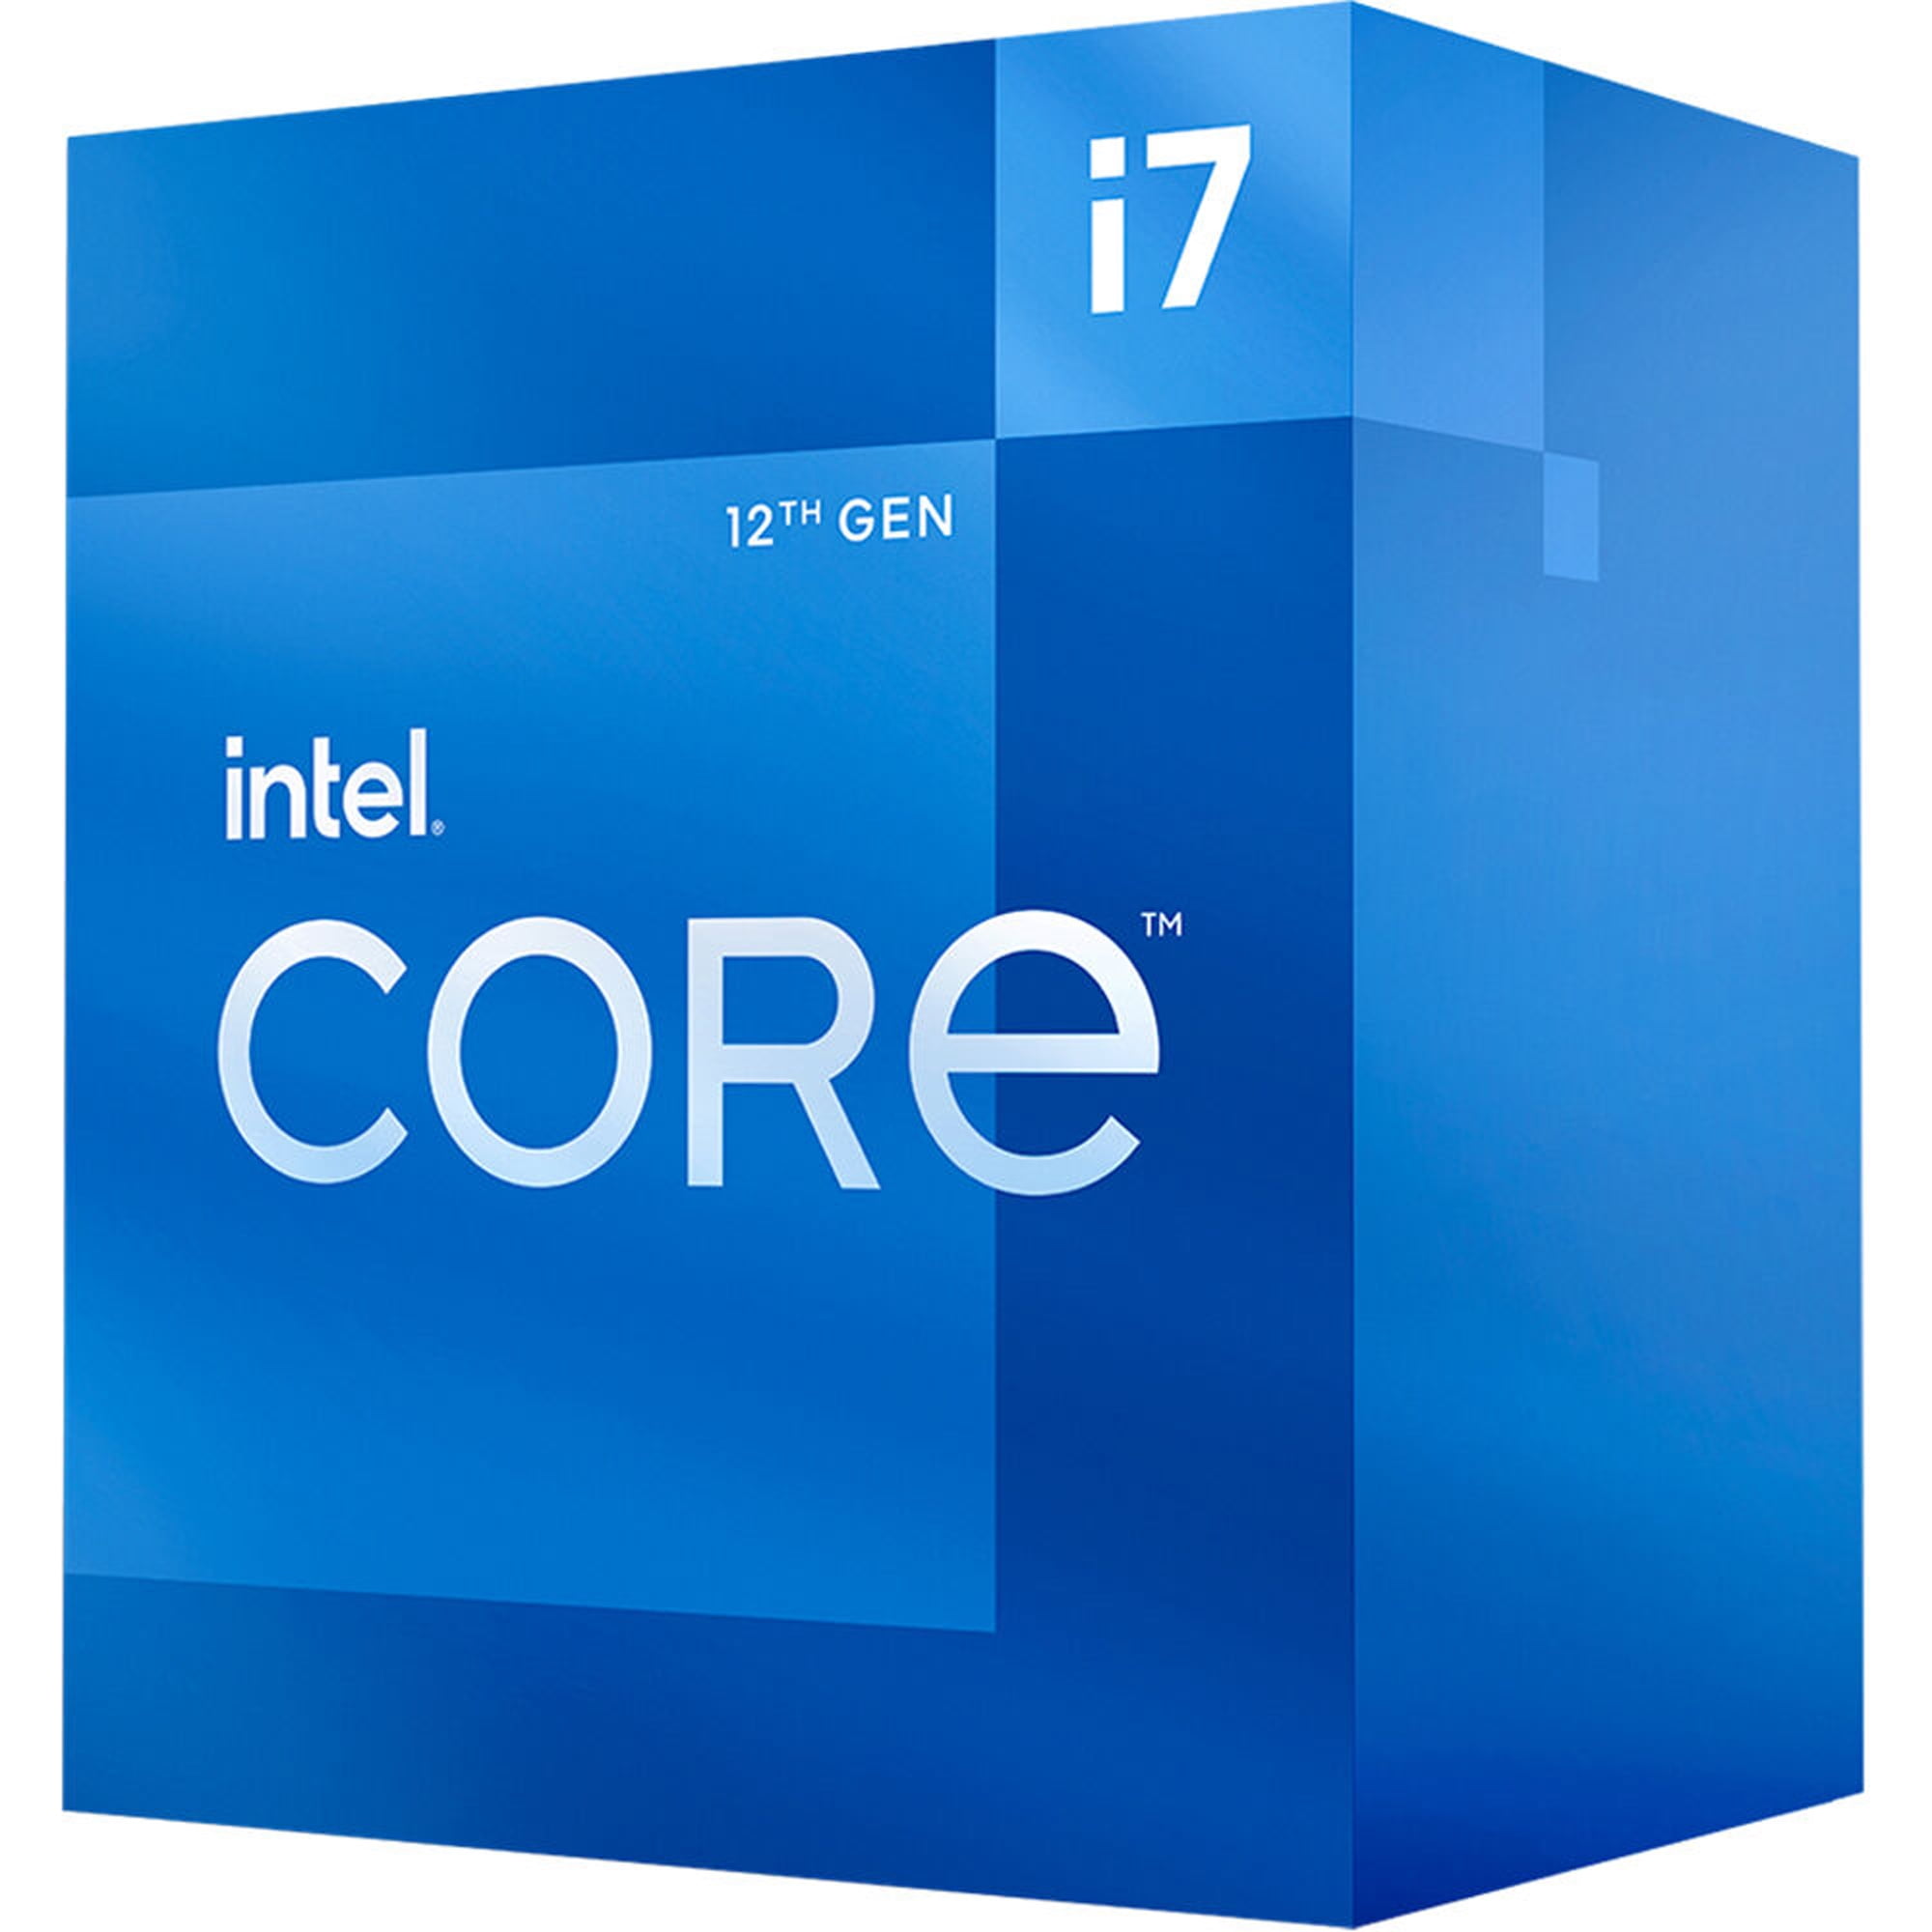 PC/タブレット PC周辺機器 Intel Core i7-12700 2.1 GHz Desktop Processor